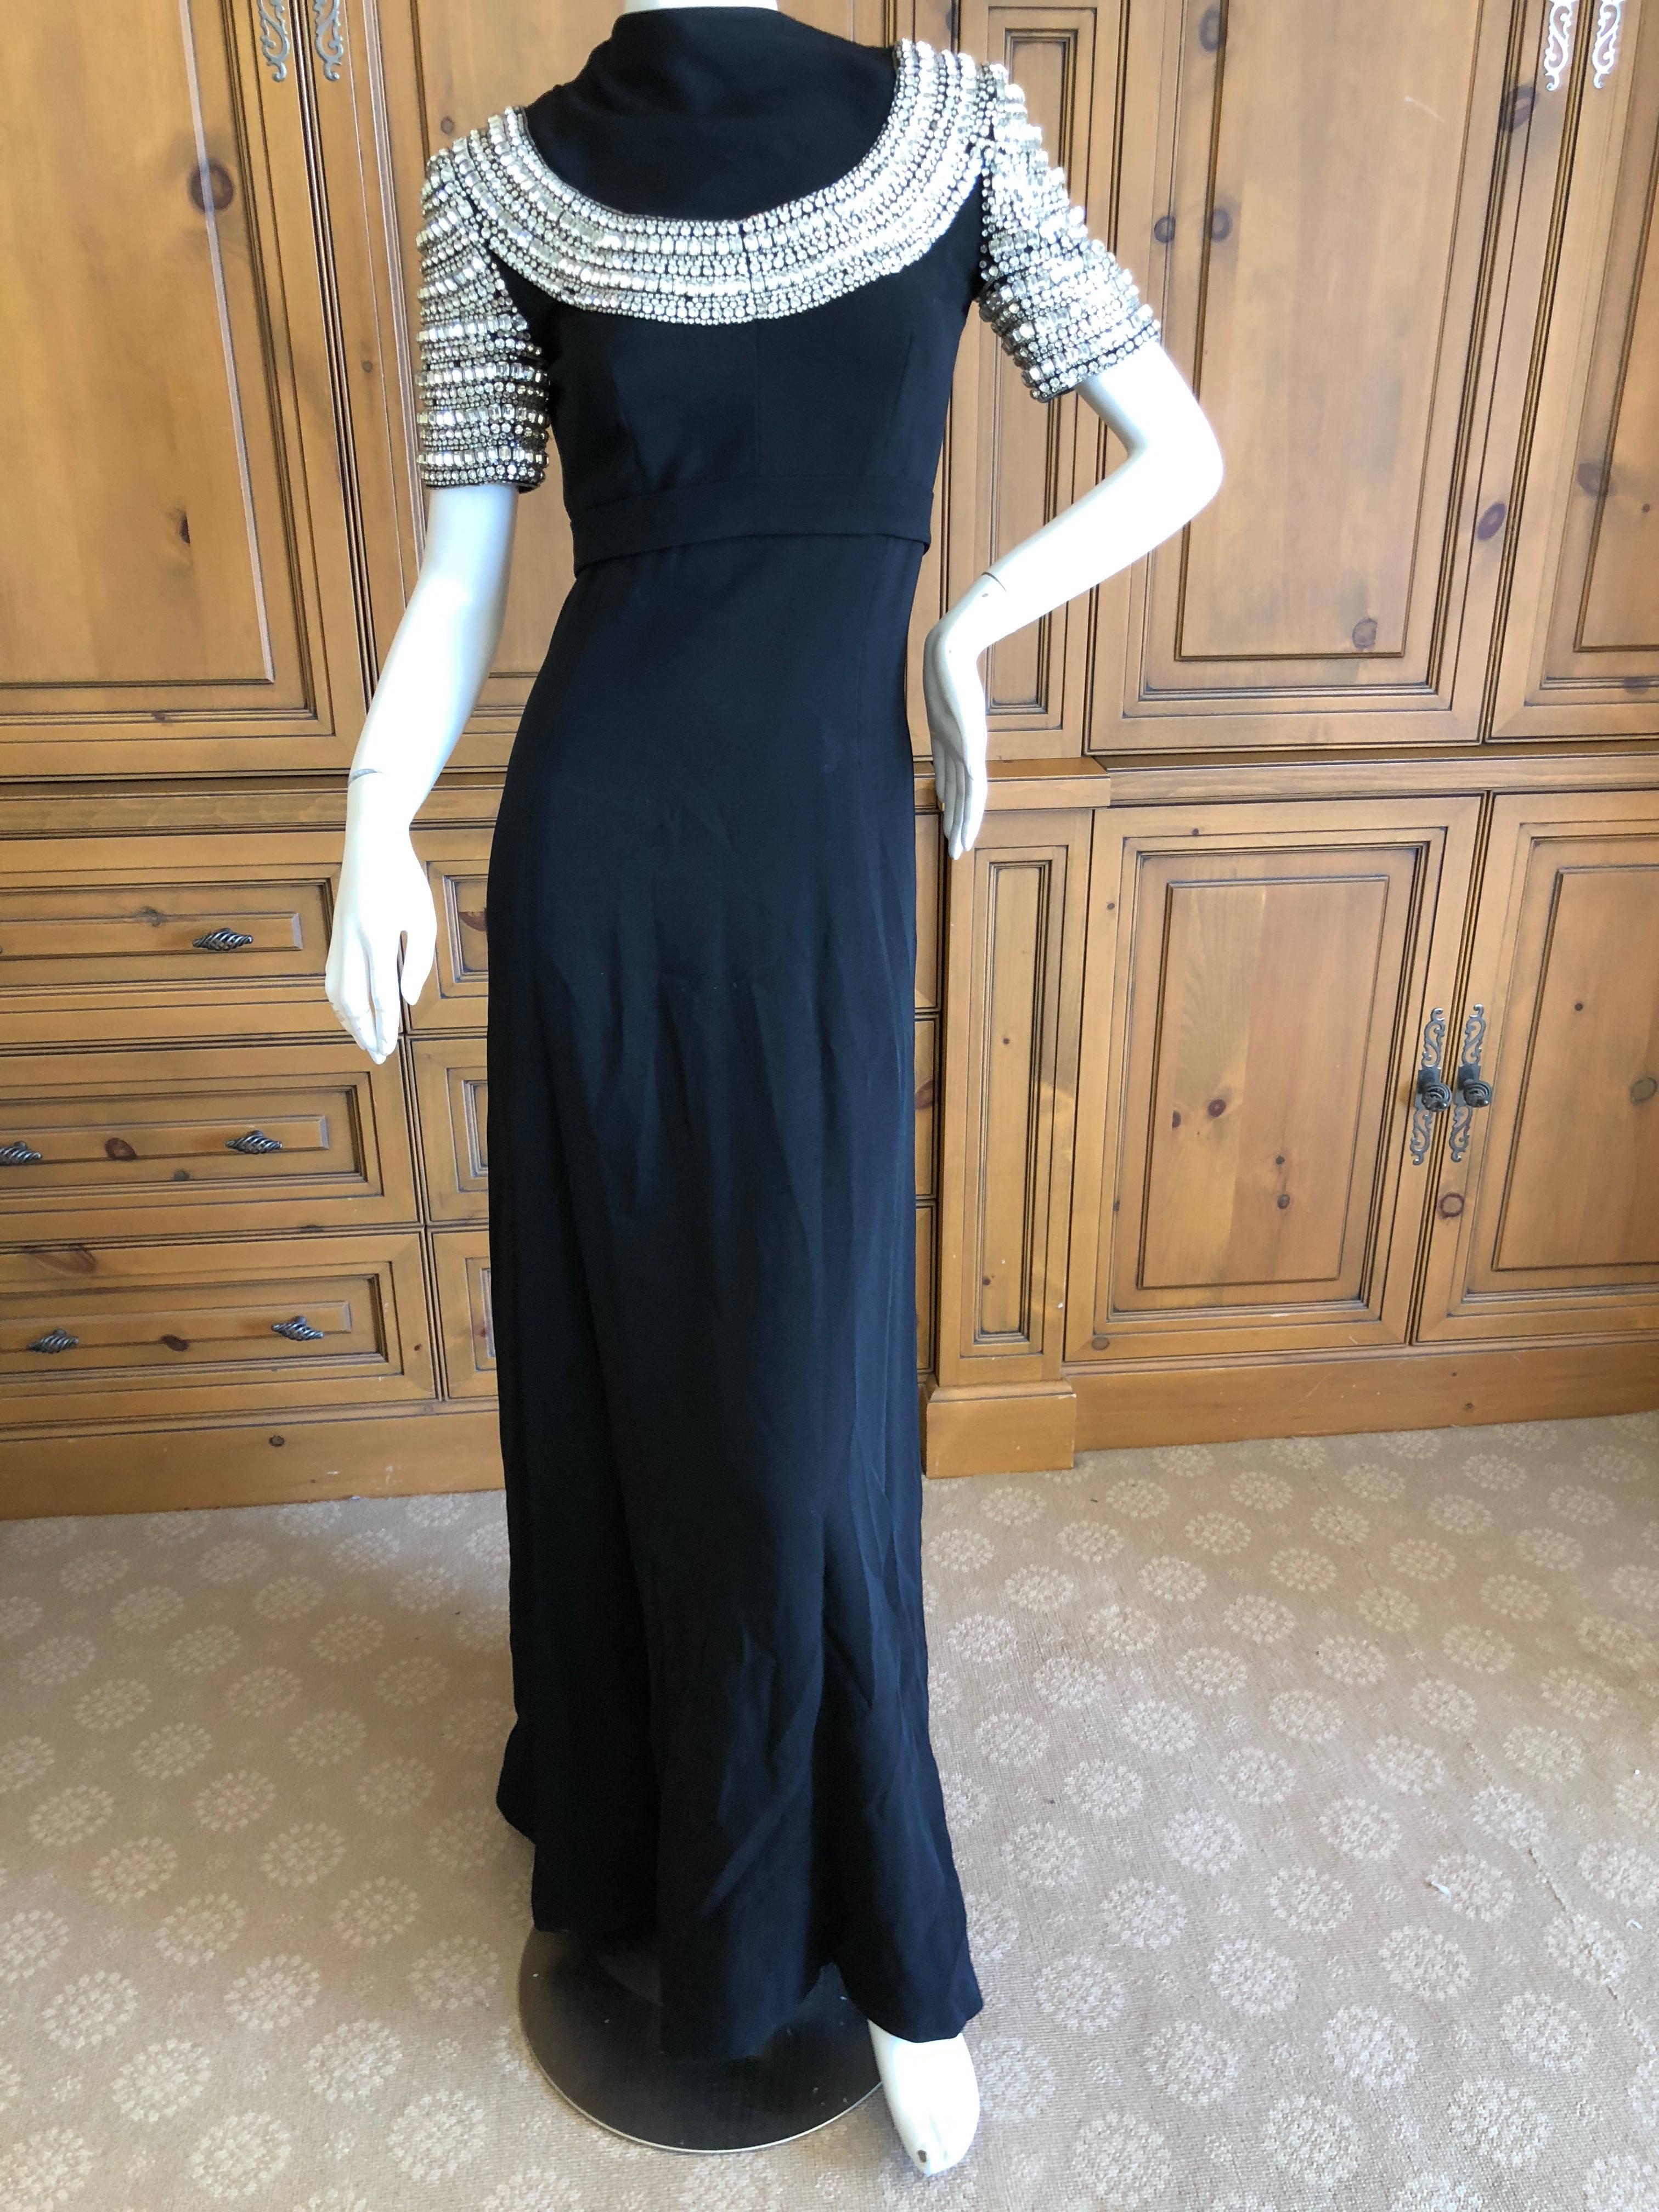 Cardinali Black Evening Dress with Rhinestone Crystal Embellishment, 1970s  For Sale 3